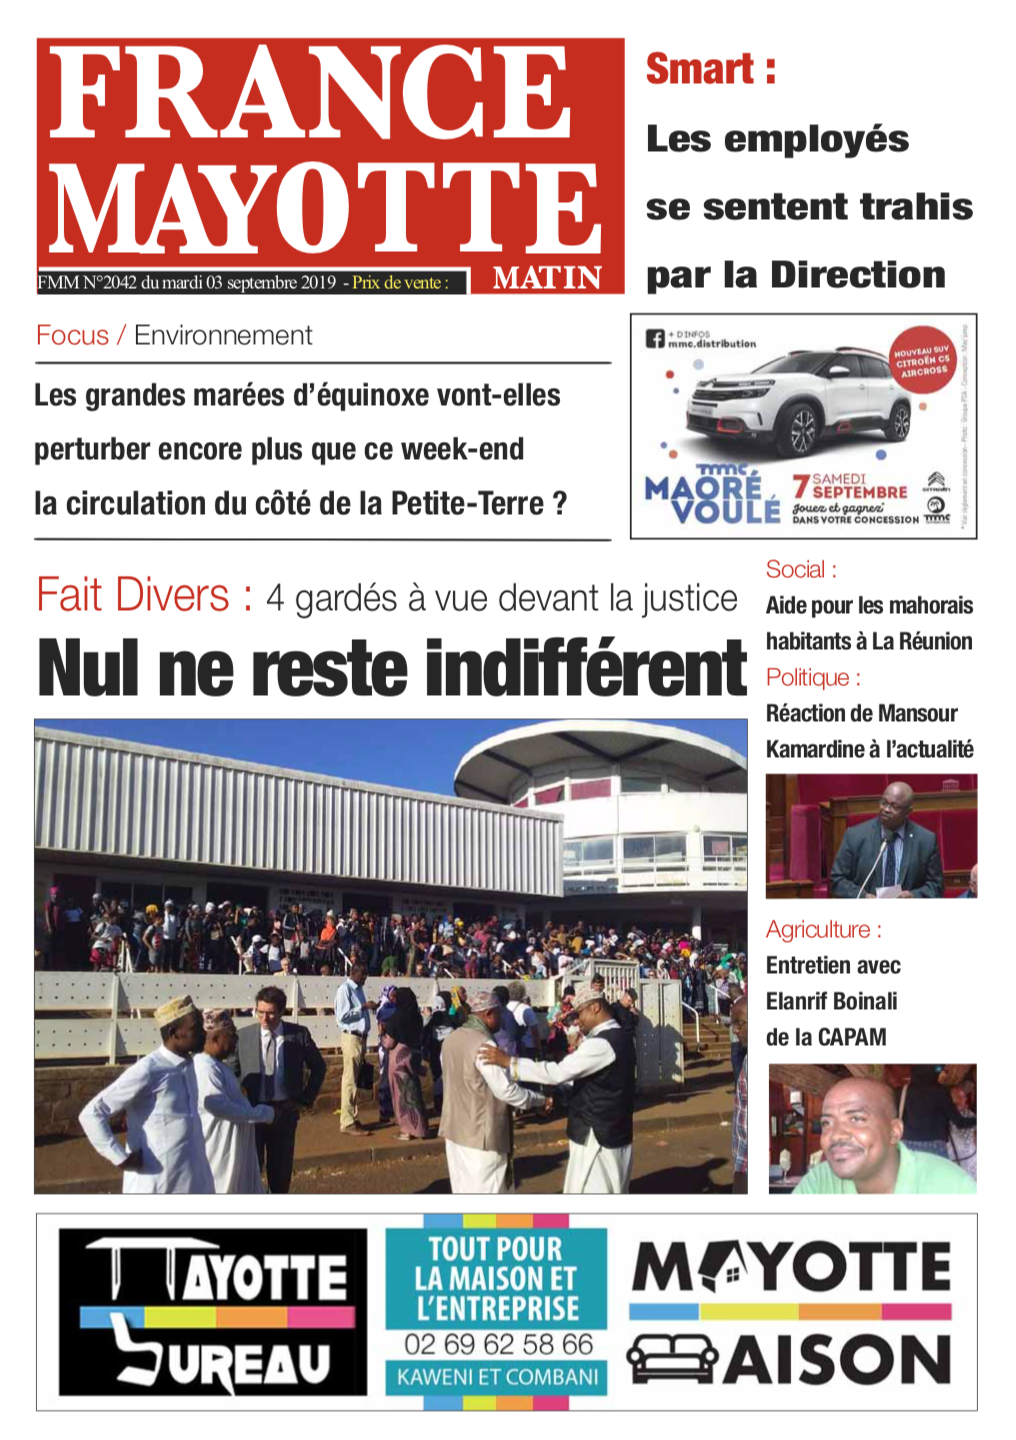 France Mayotte Mardi 3 septembre 2019